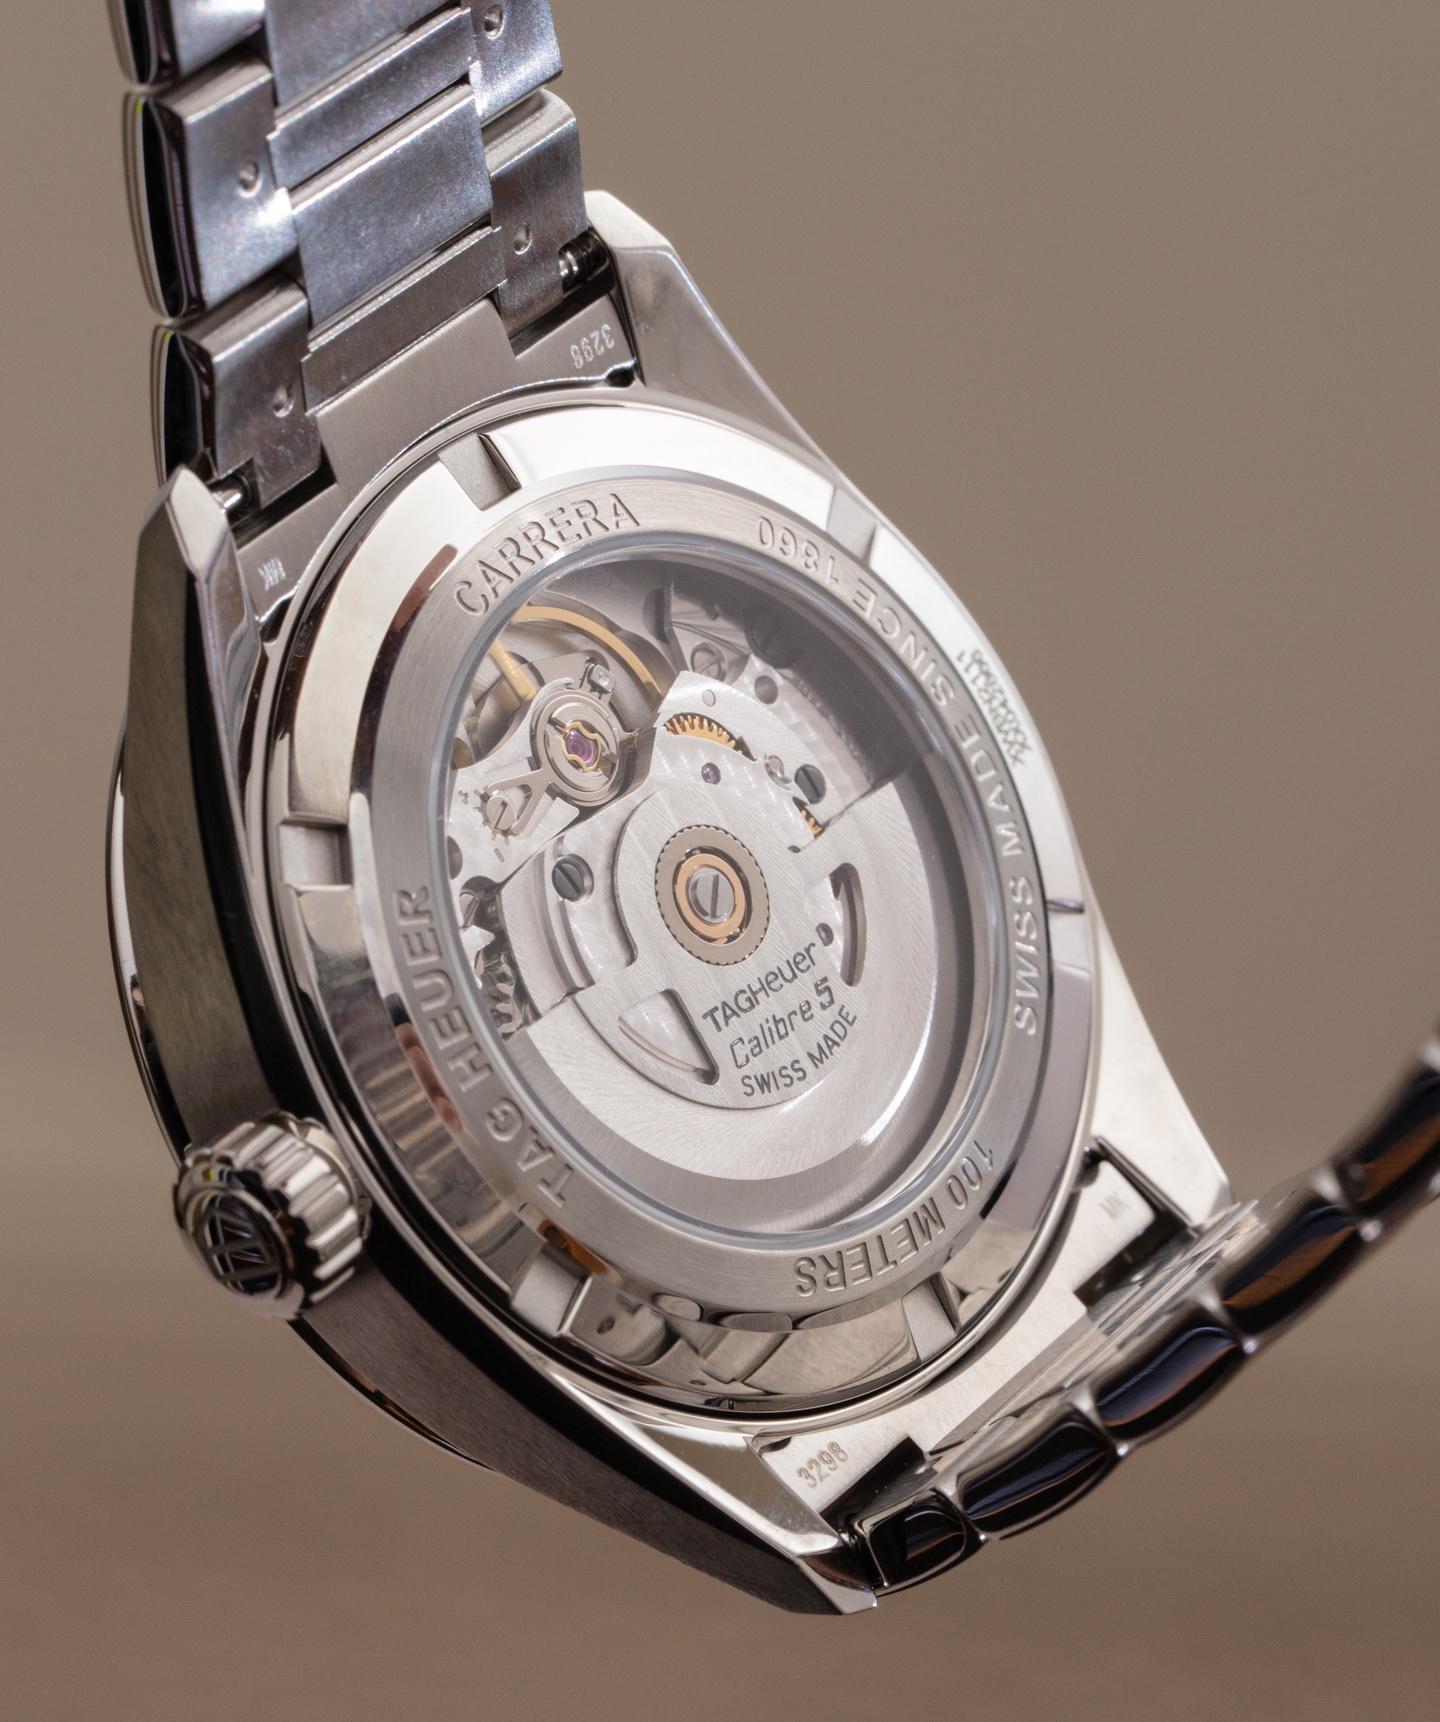  TAG Heuer Carrera Automatic Watch - Diameter 39 mm